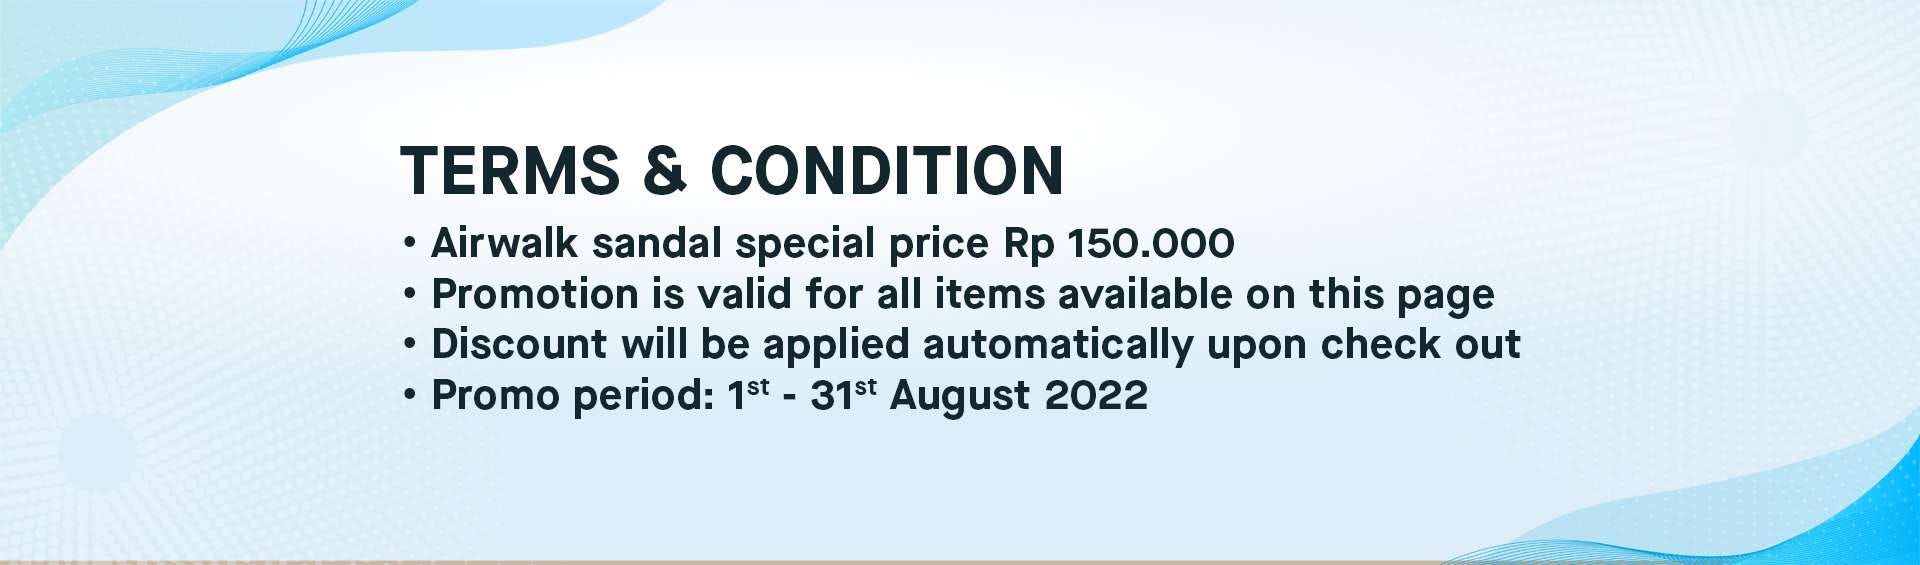 Special Price Airwalk Sandal 150K